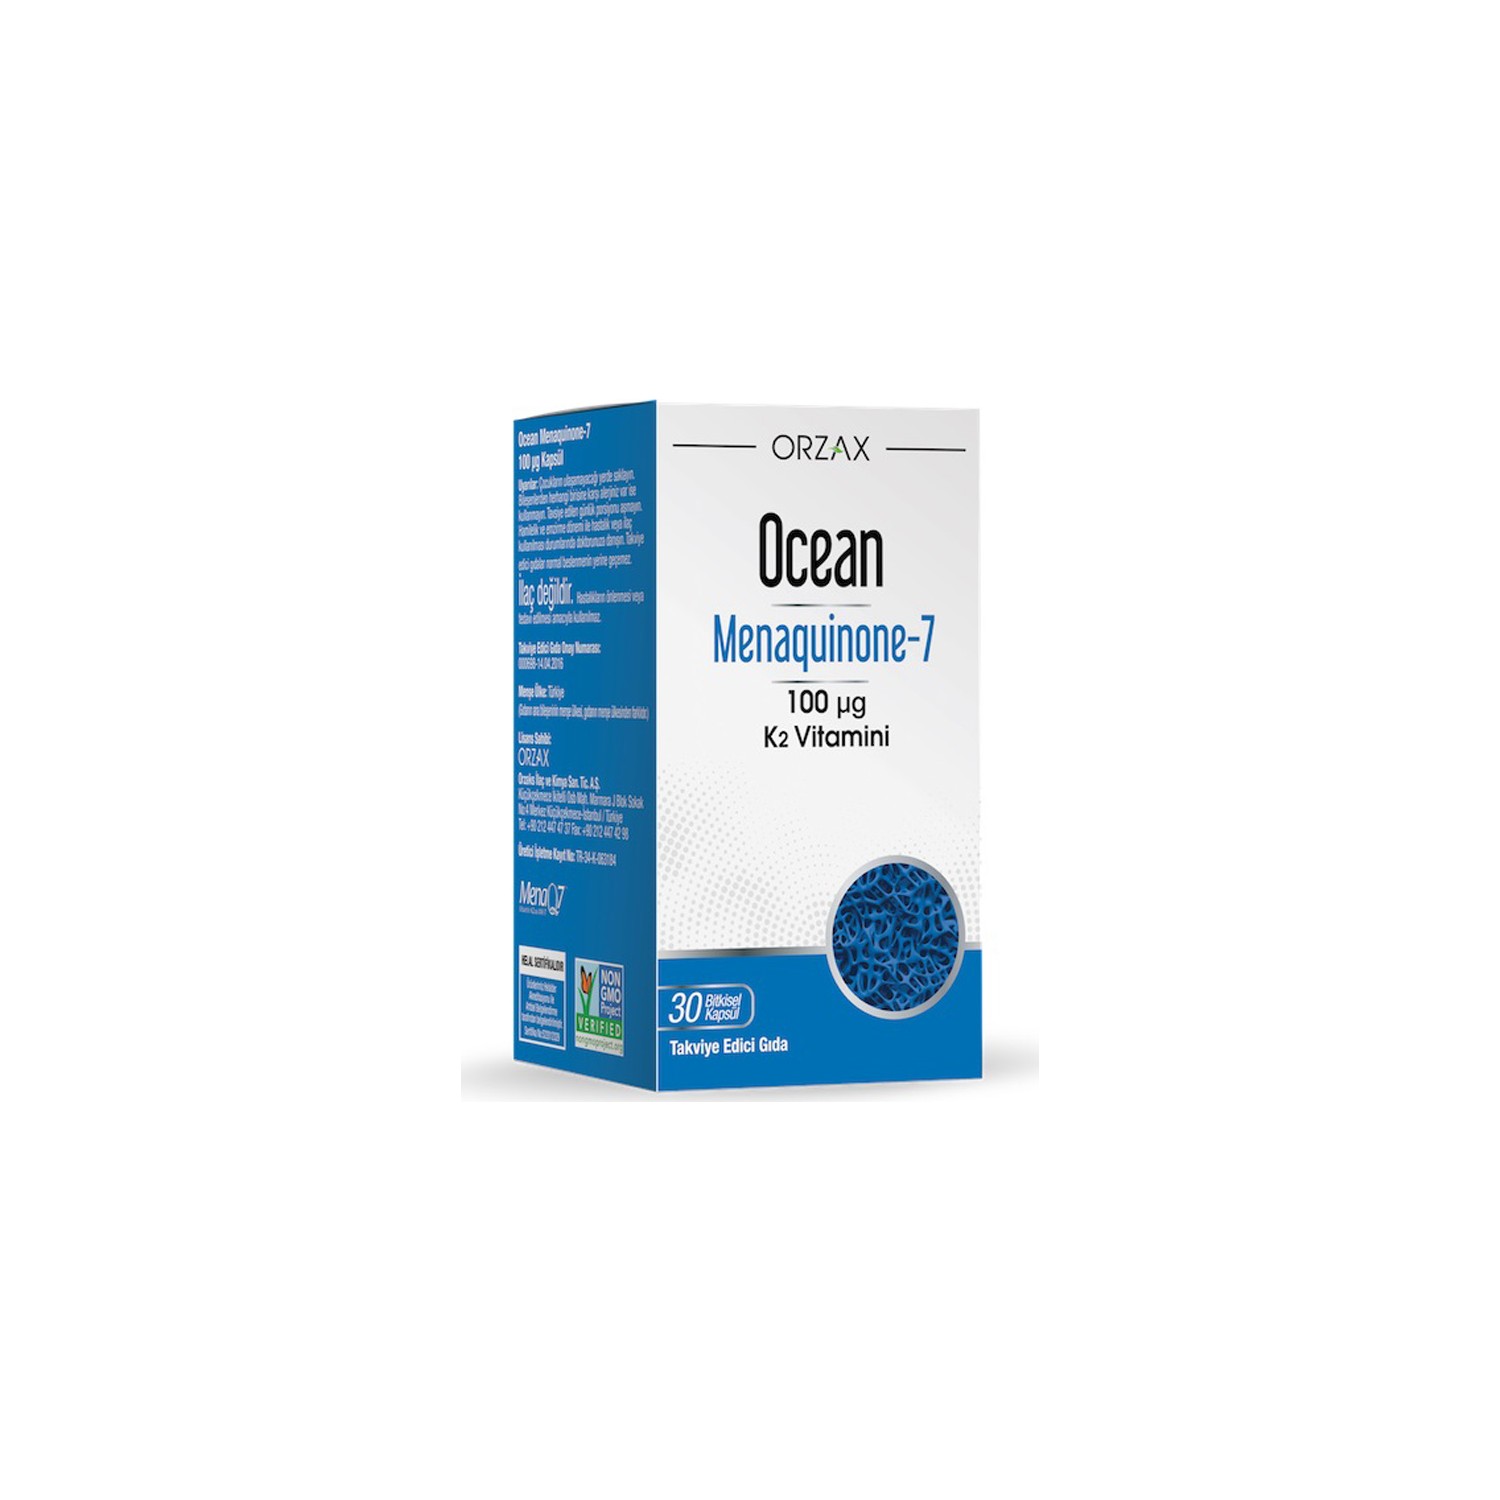 Пищевая добавка Orzax Ocean Mk-7 Vitamin К2 100 мкг, 30 капсул doctor s best витамин k2 mk 7 с menaq7 и витамином d3 180 мкг 60 капсул